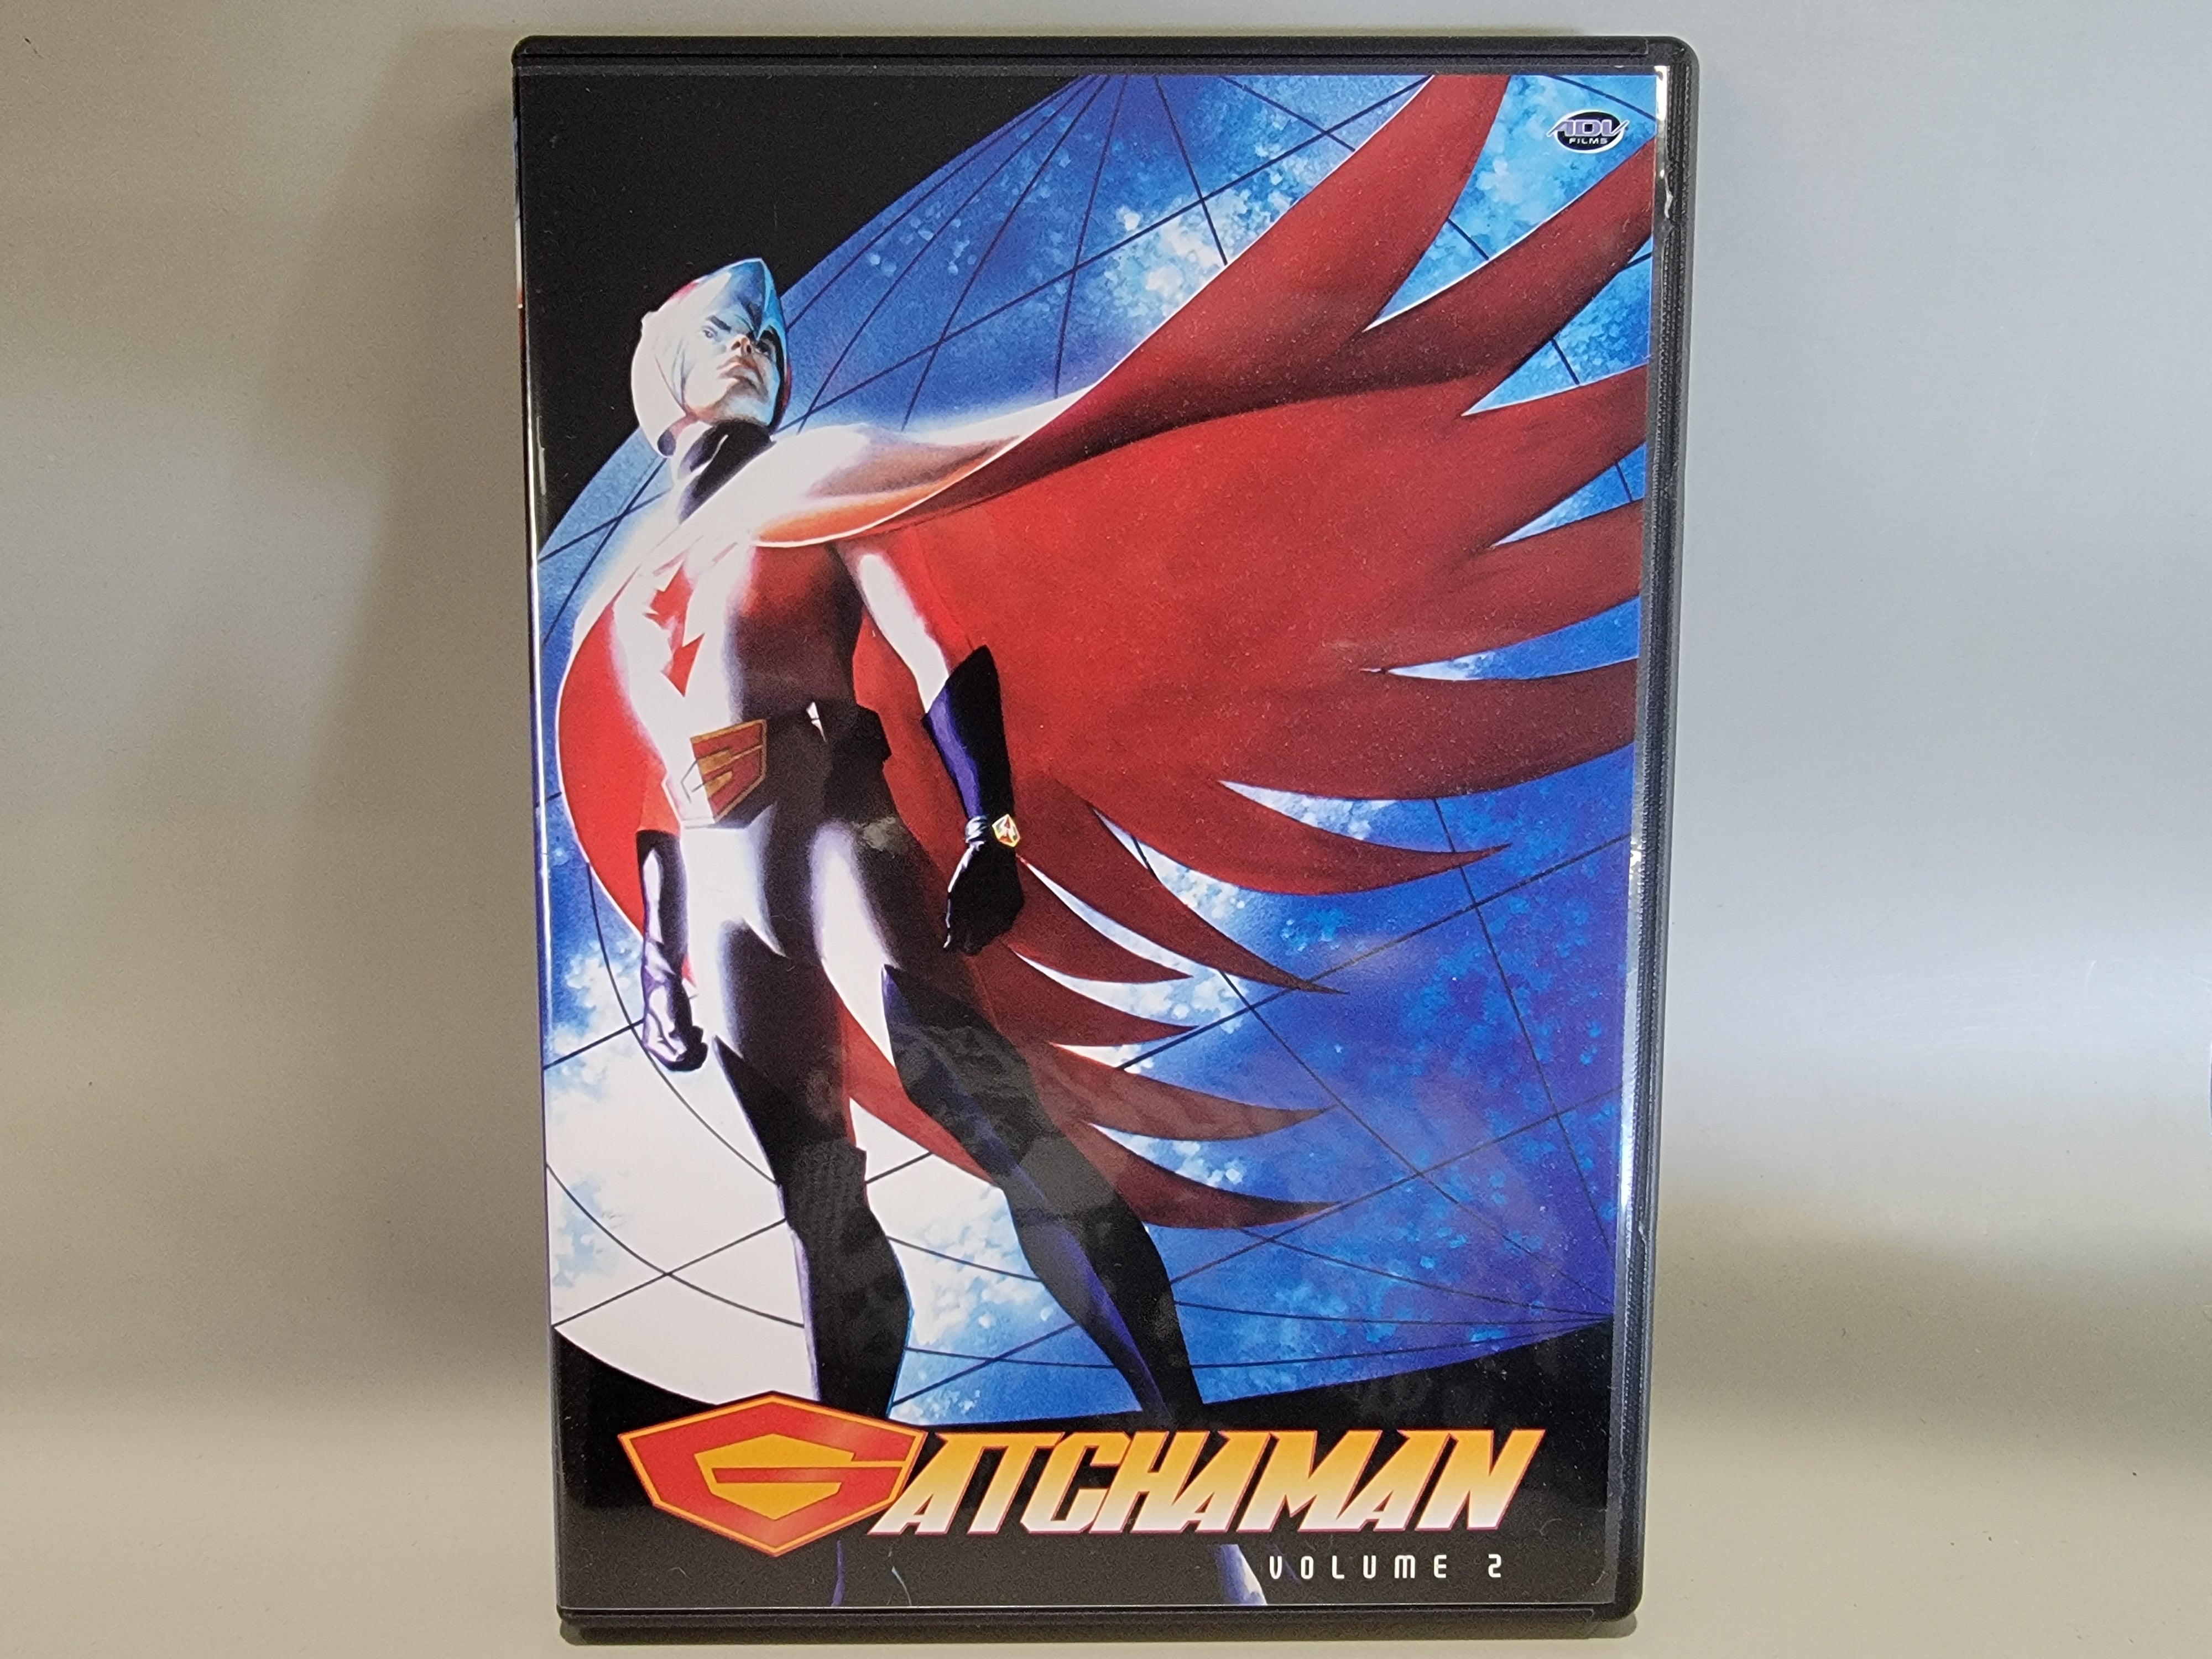 GATCHAMAN VOLUME 2 DVD [USED]